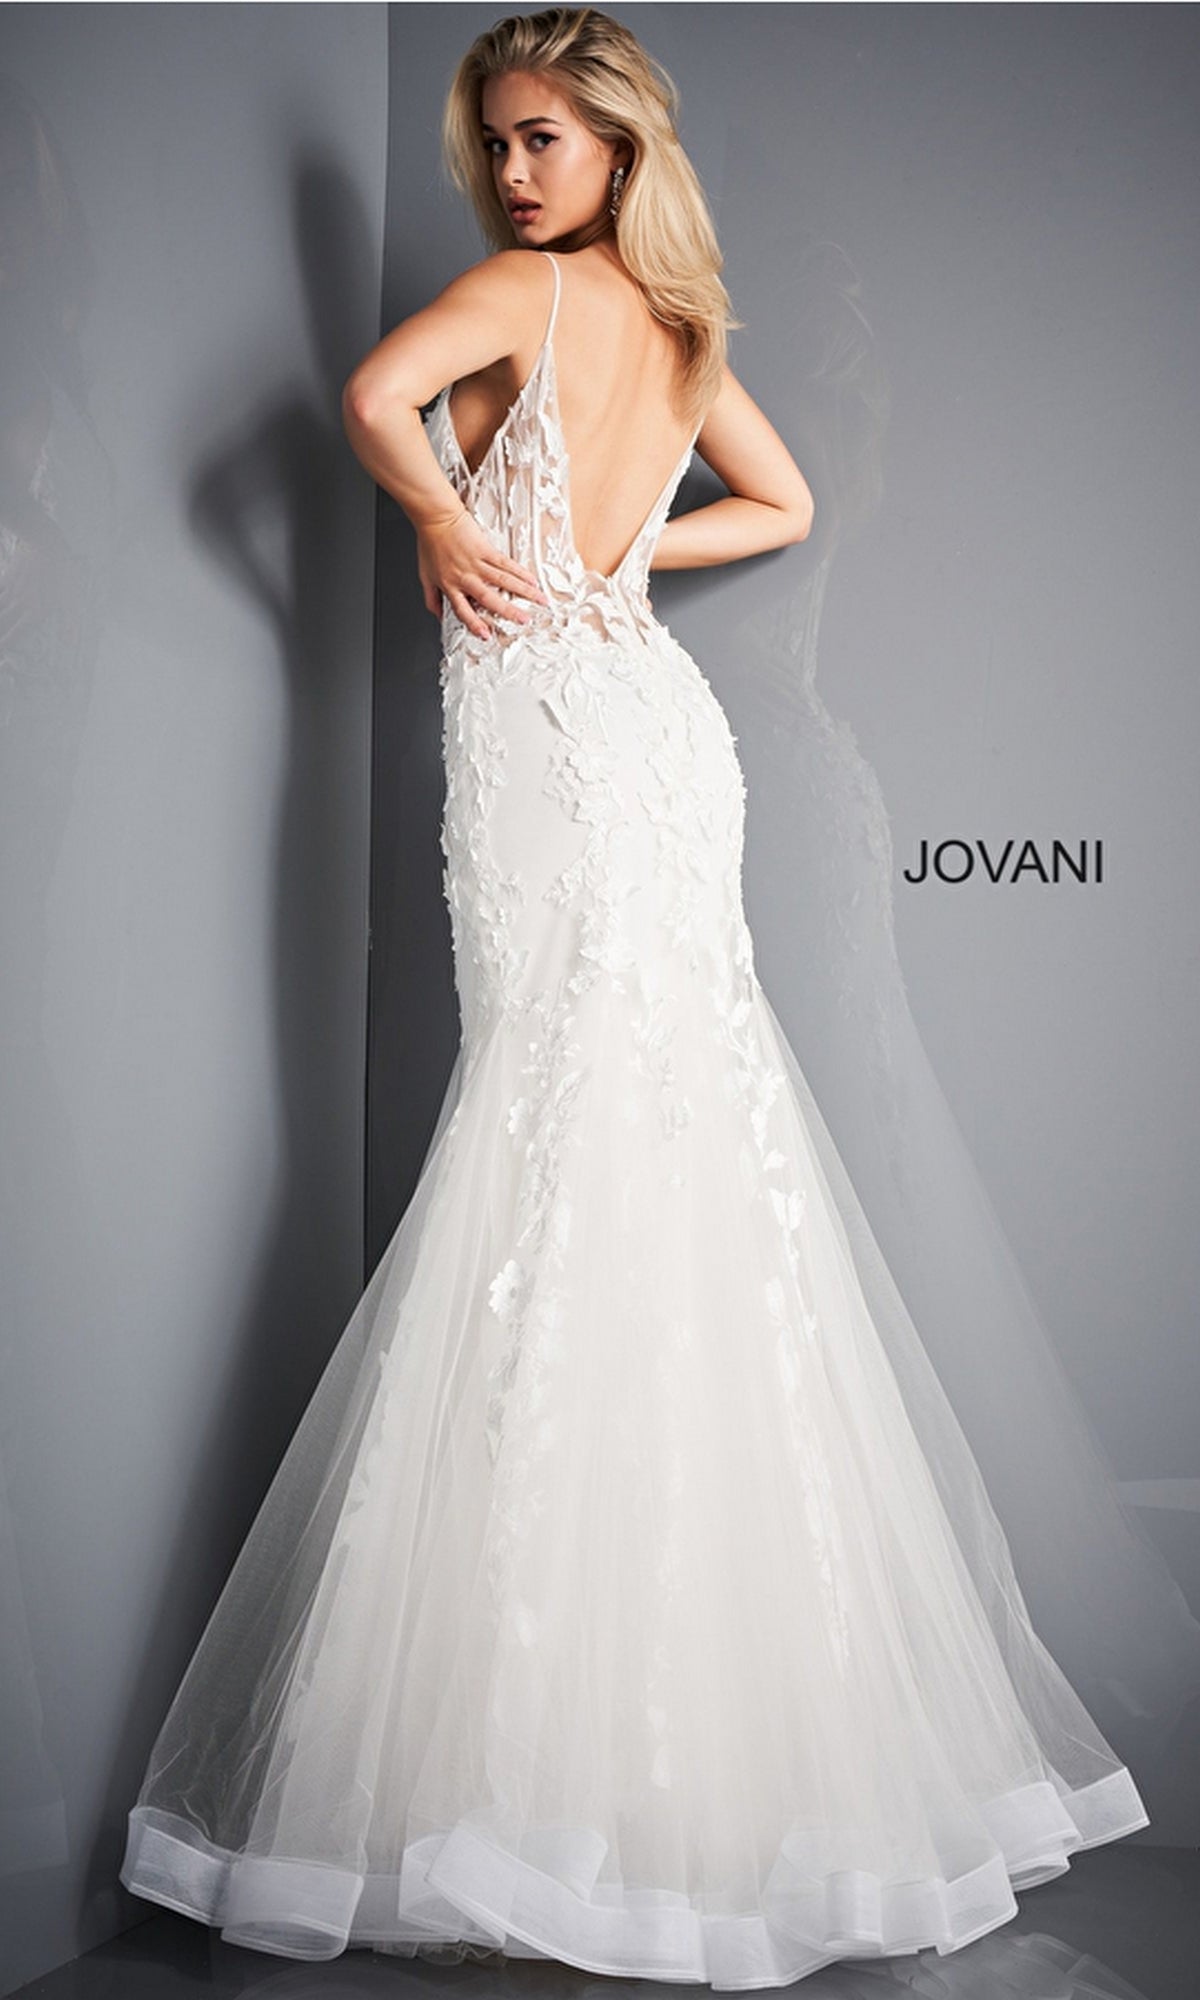 Long Prom Dress by Jovani 02841